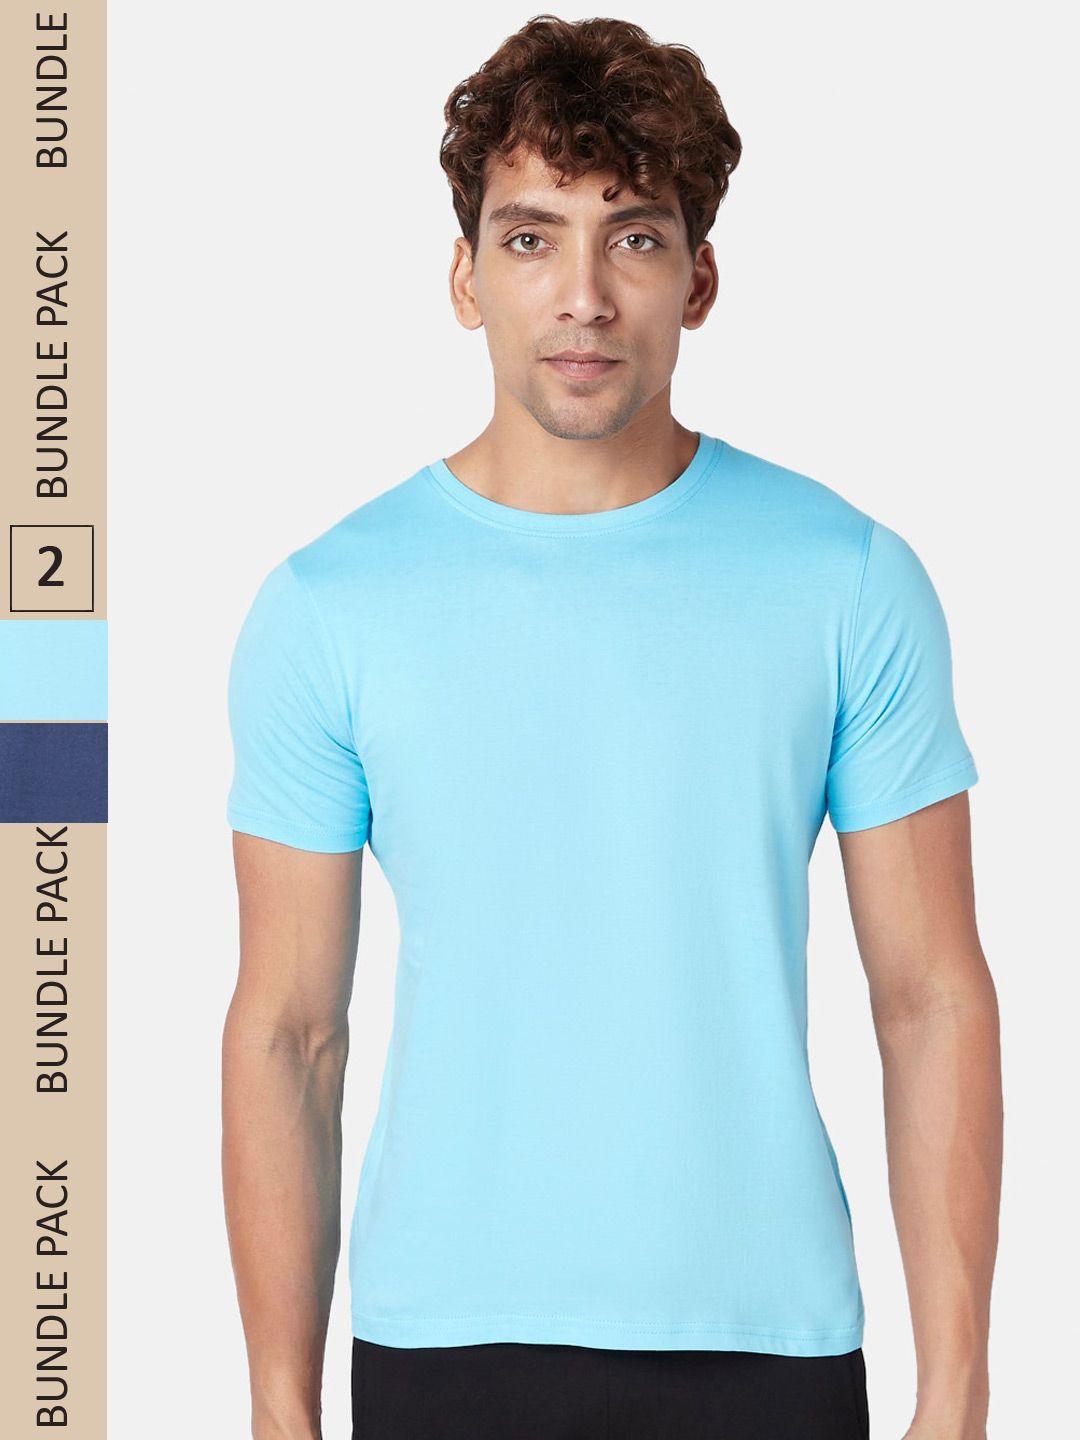 ajile by pantaloons men blue typography 2 t-shirt